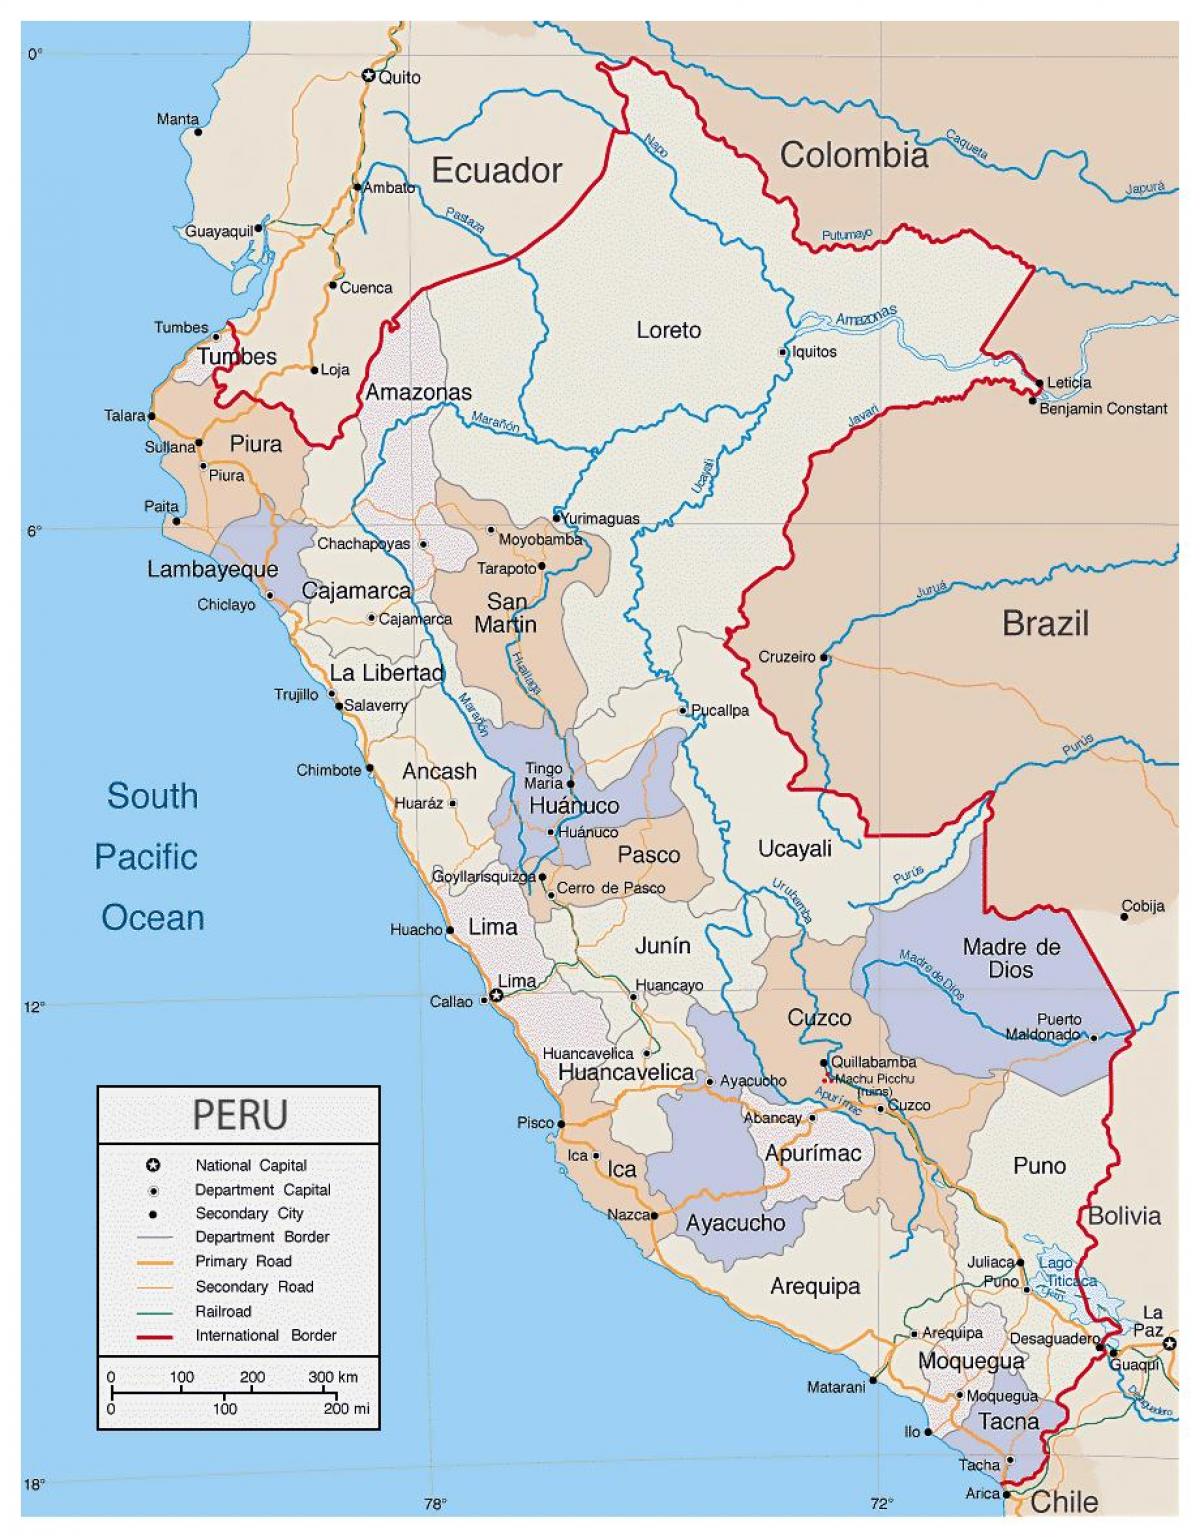 mapa mapa zehatza Peru